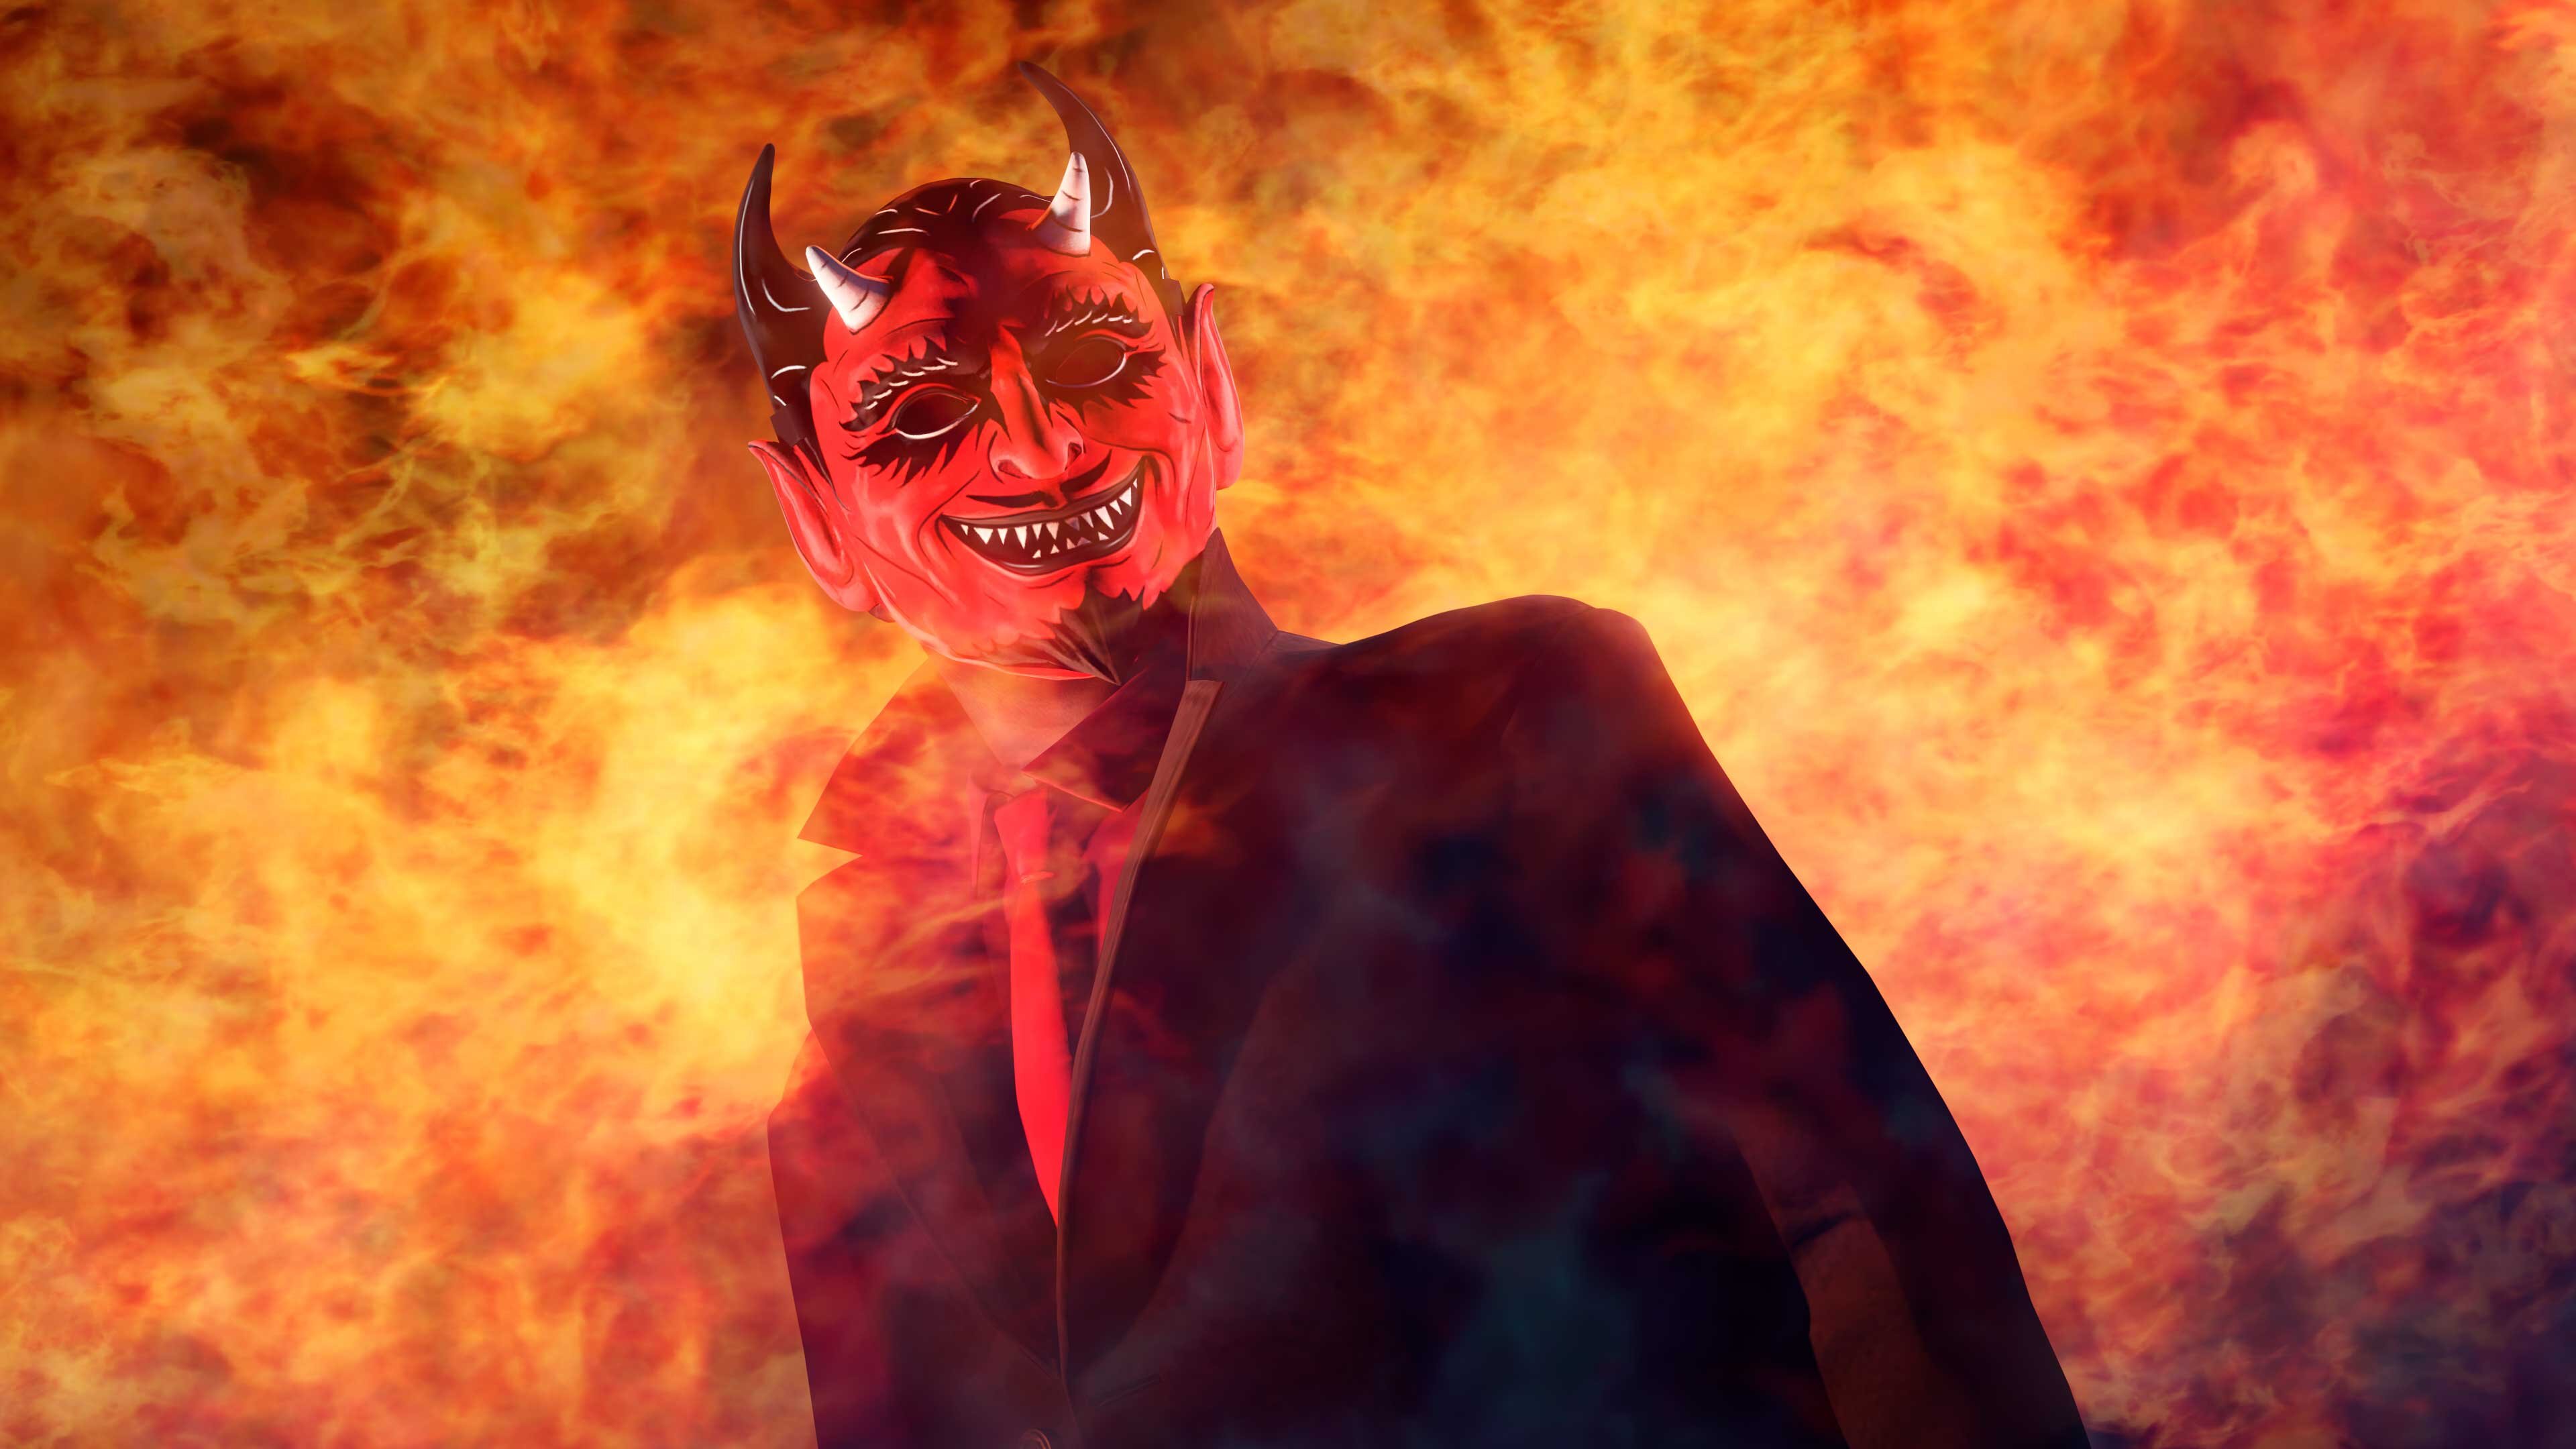 More information about "Claim gratis een Halloween masker op GTA Online"